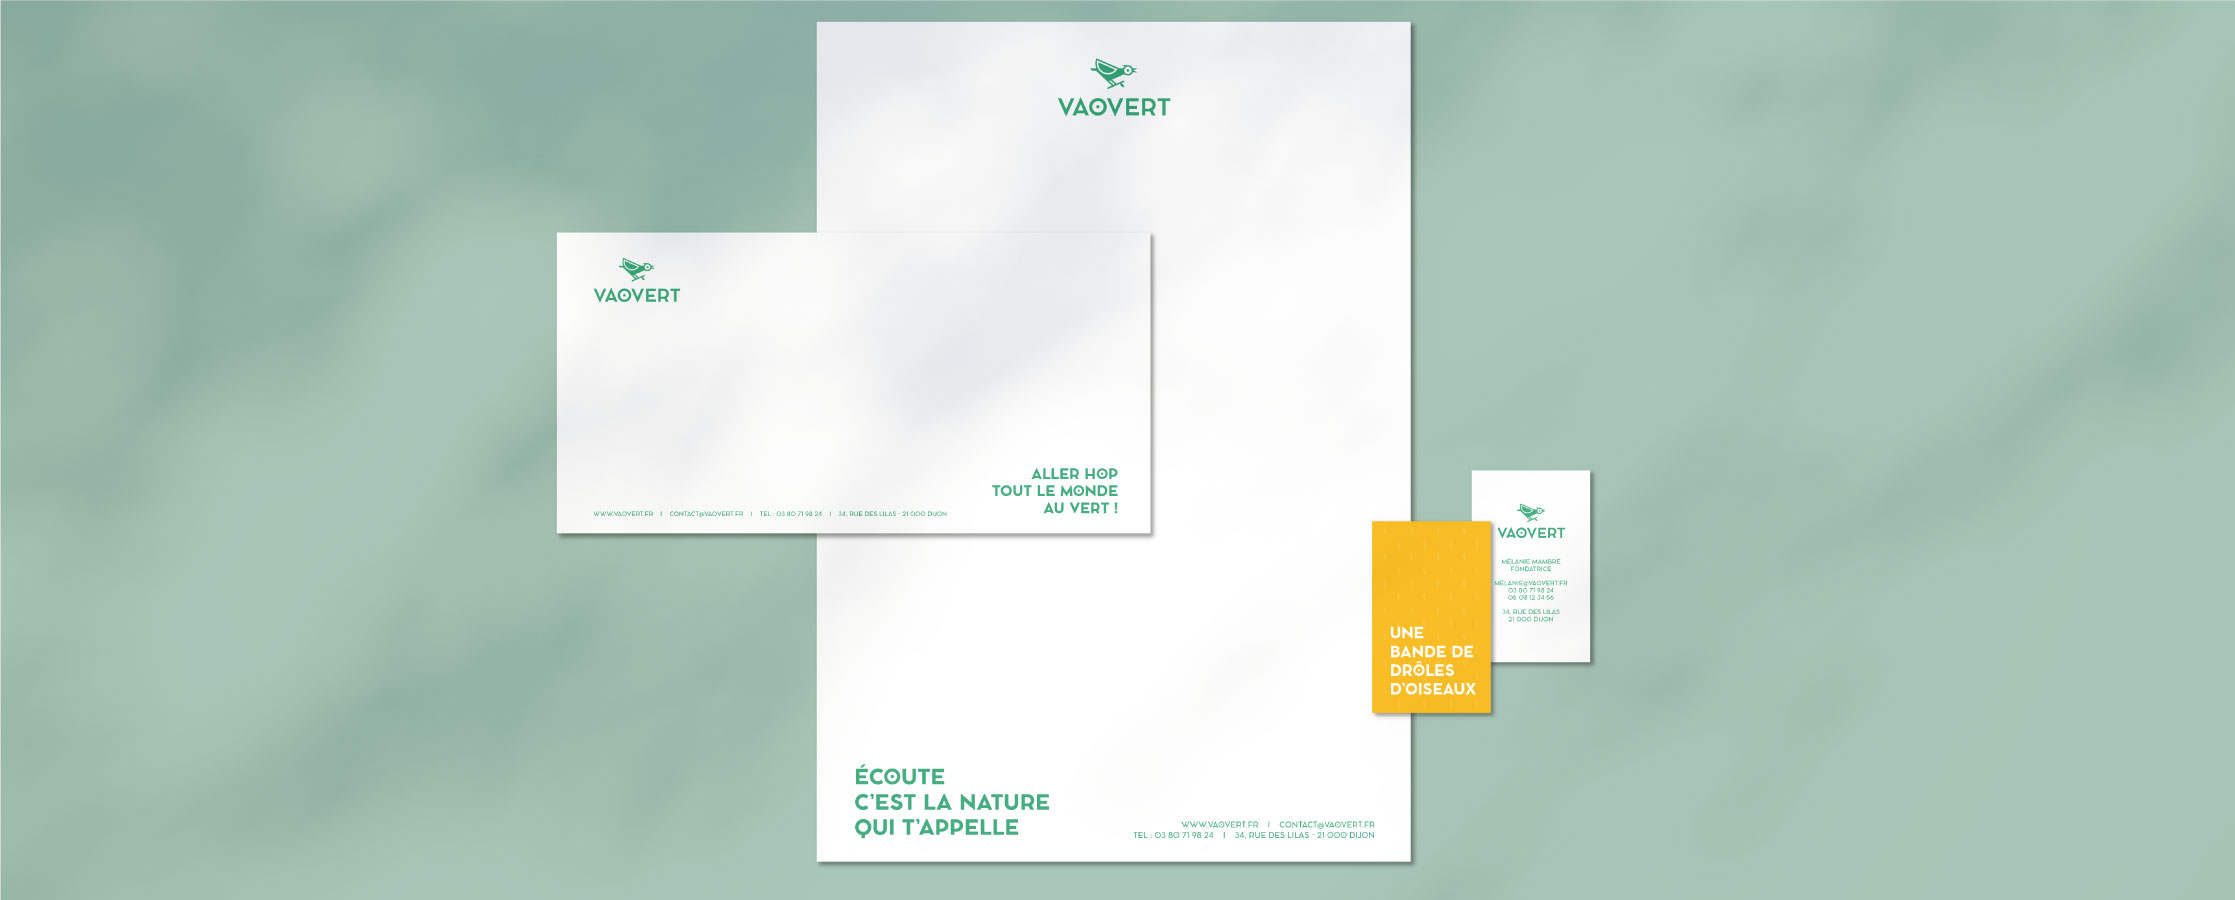 Agence branding pack design Paris - Pulp design